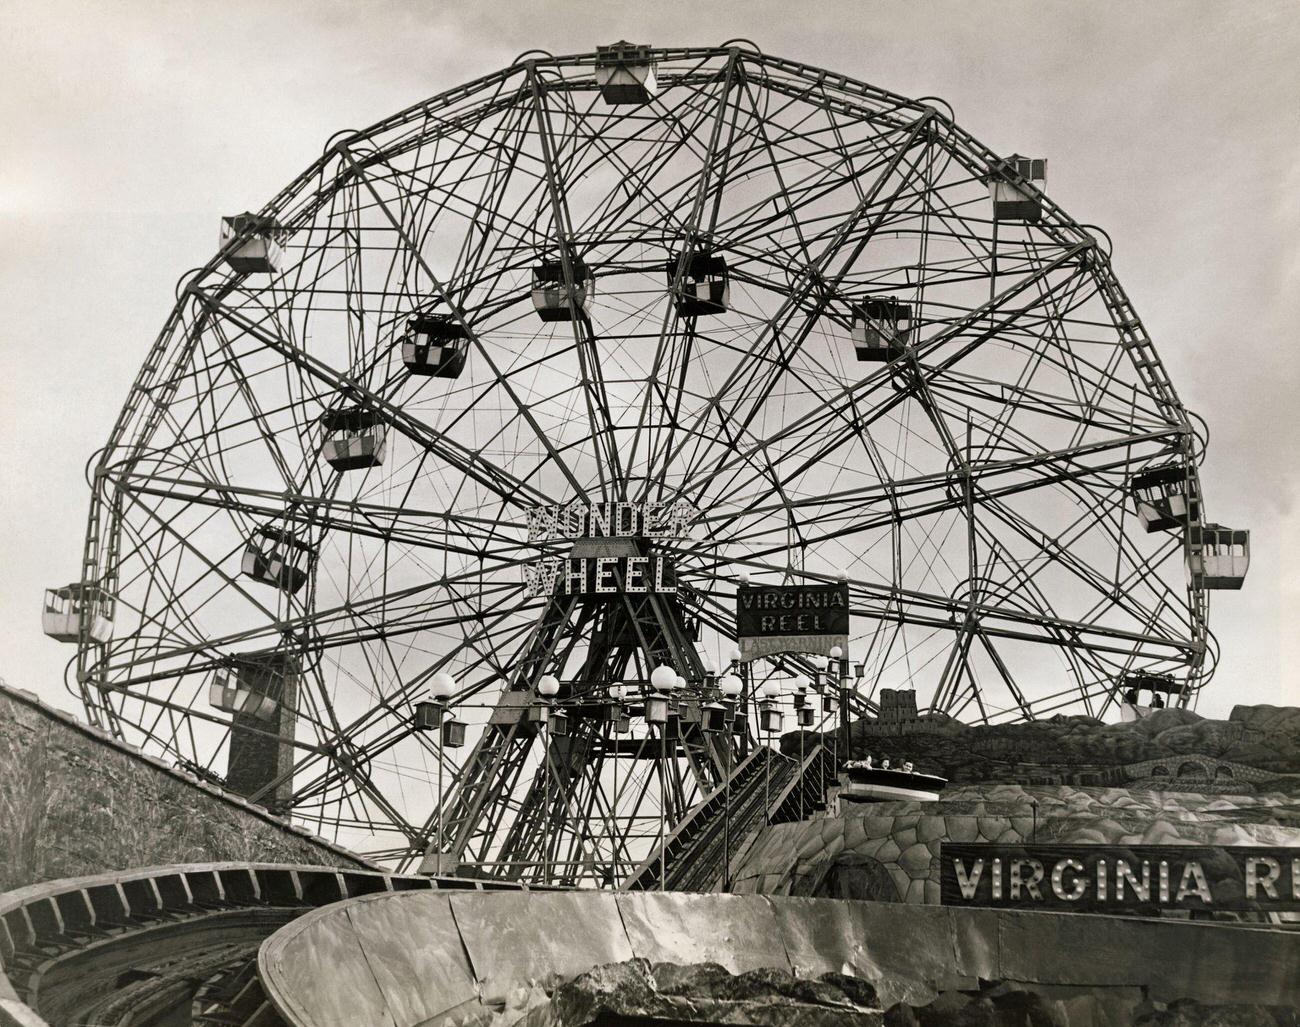 Wonder Wheel And Virginia Reel At Coney Island, April 24, 1938